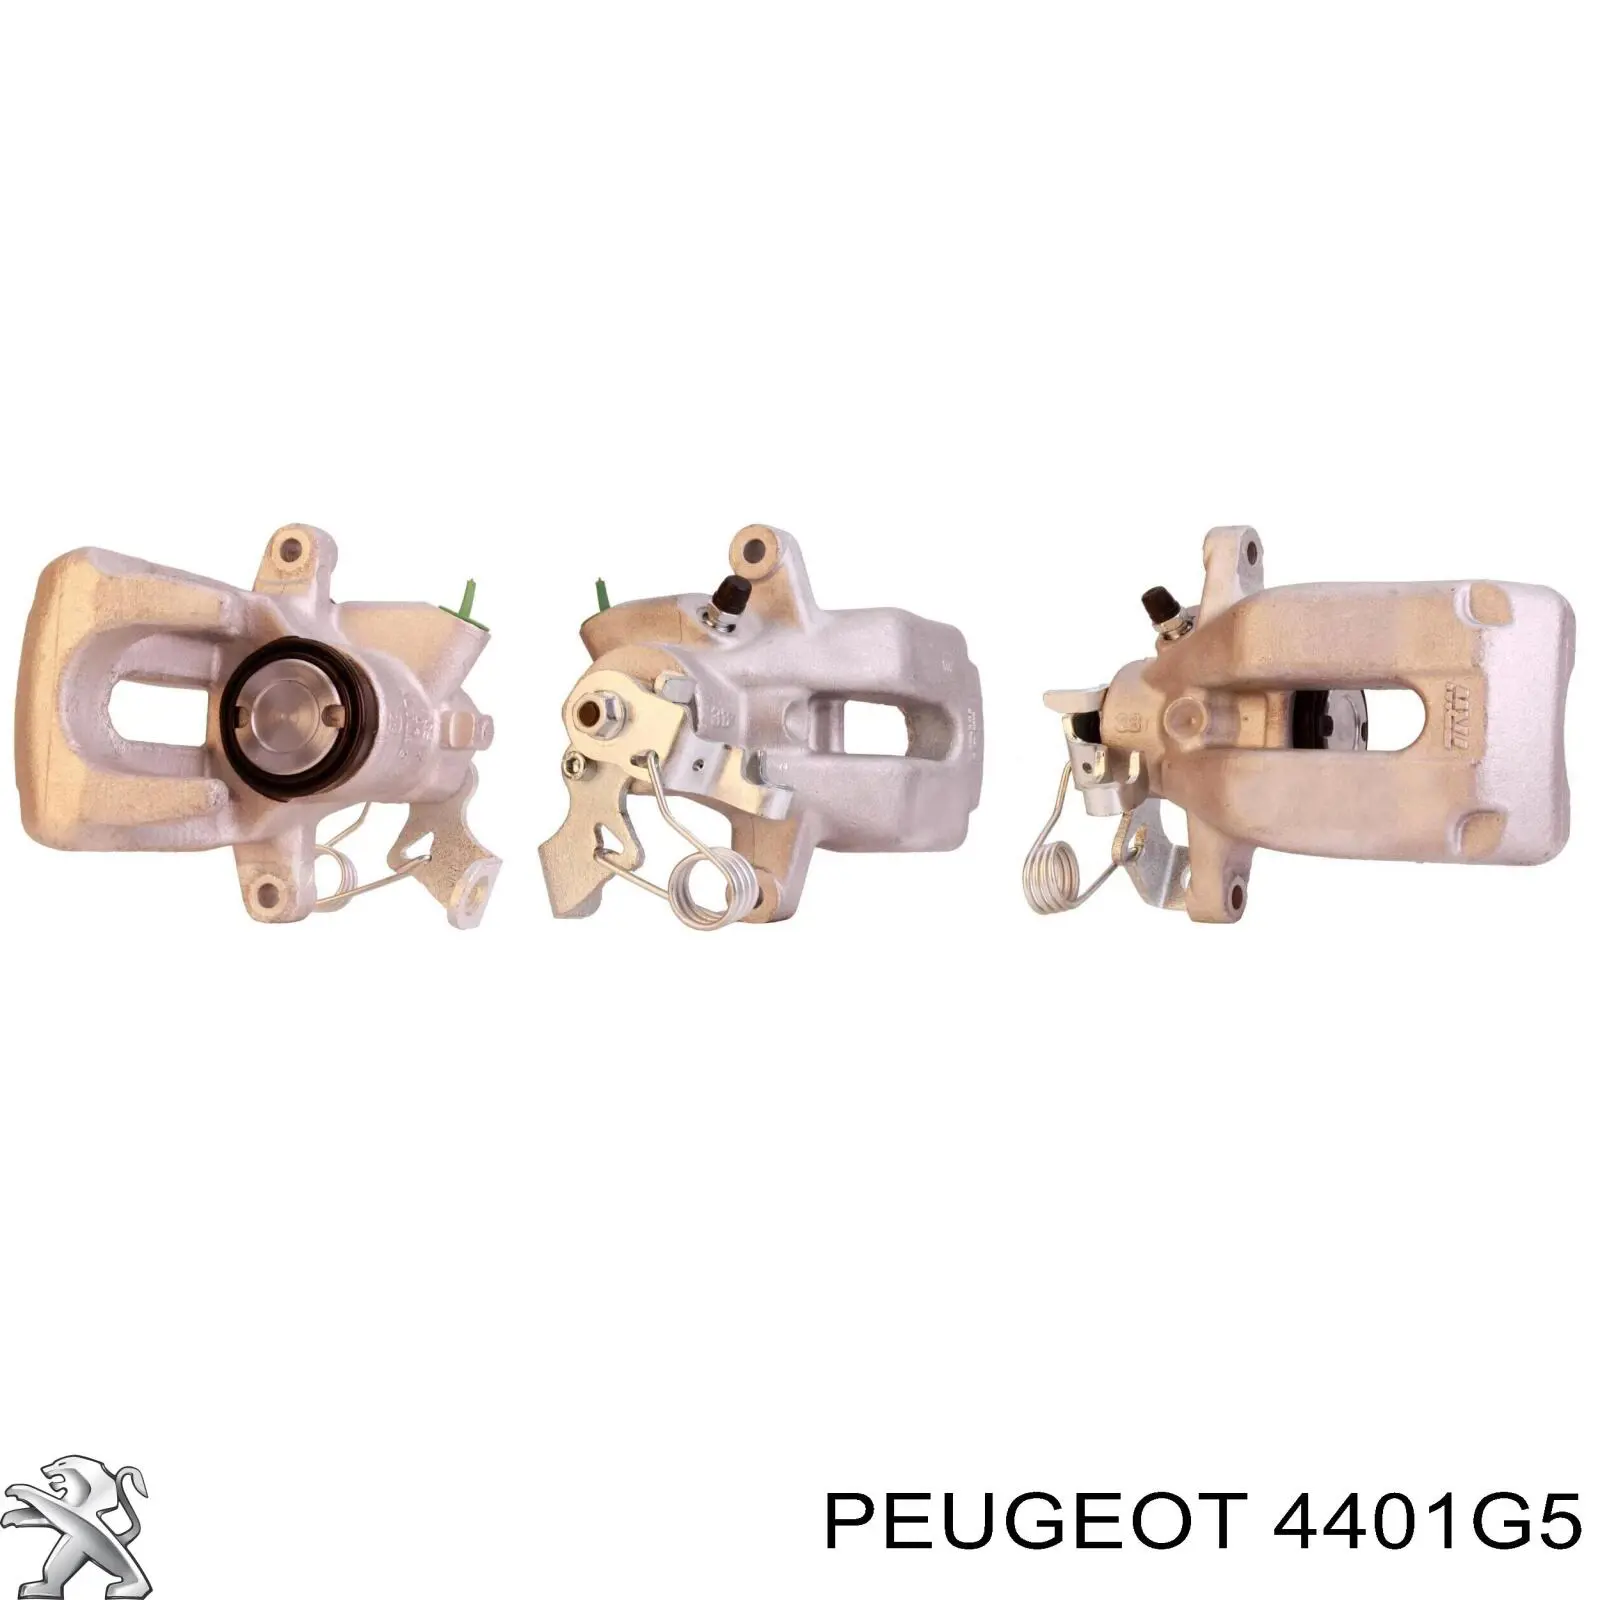 4401G5 Peugeot/Citroen pinza de freno trasero derecho